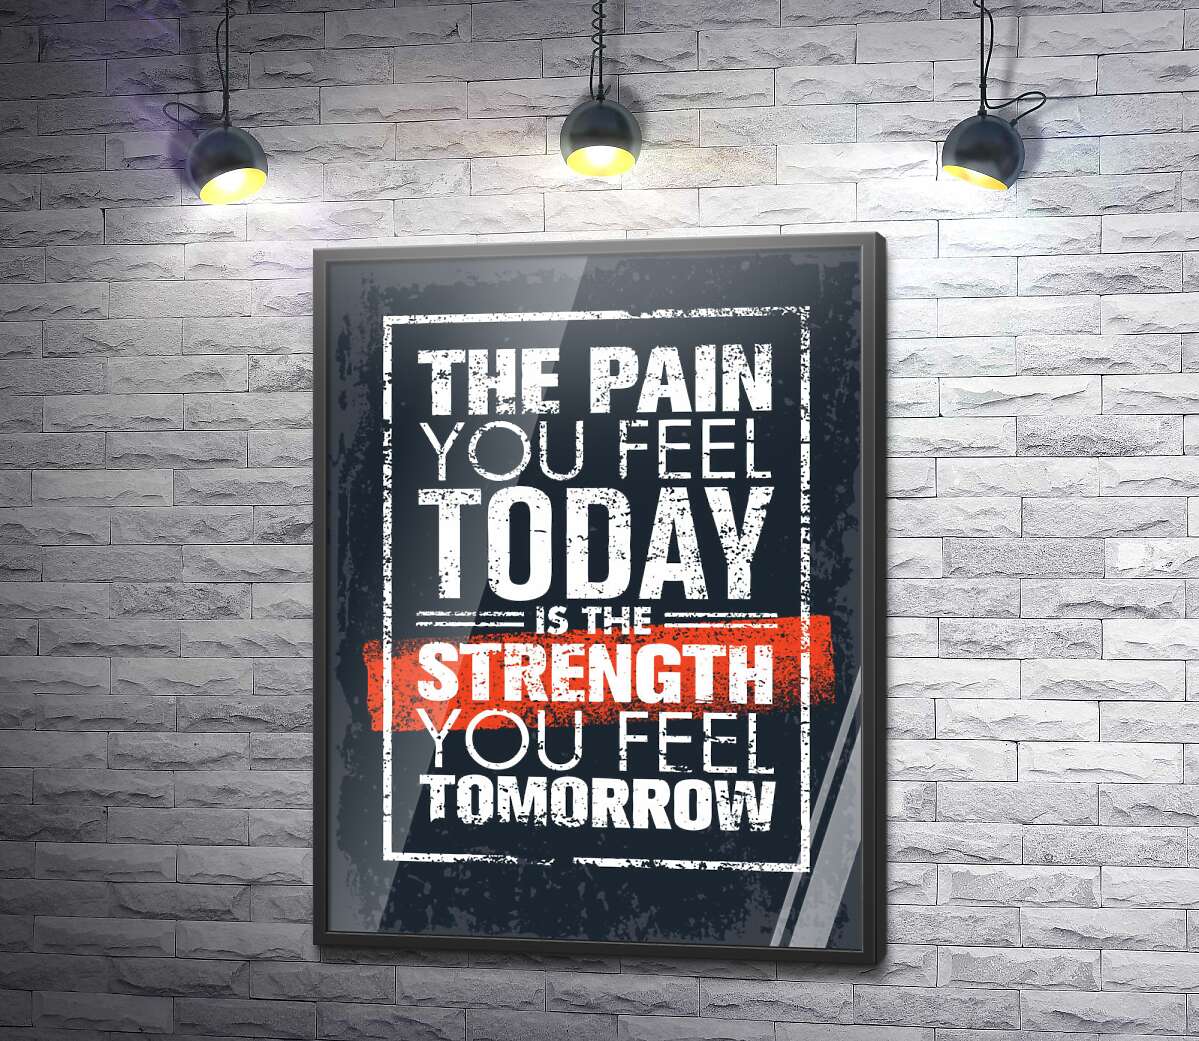 постер Мотивационная надпись: "The pain you fell today is the strength you fell tomorrow"